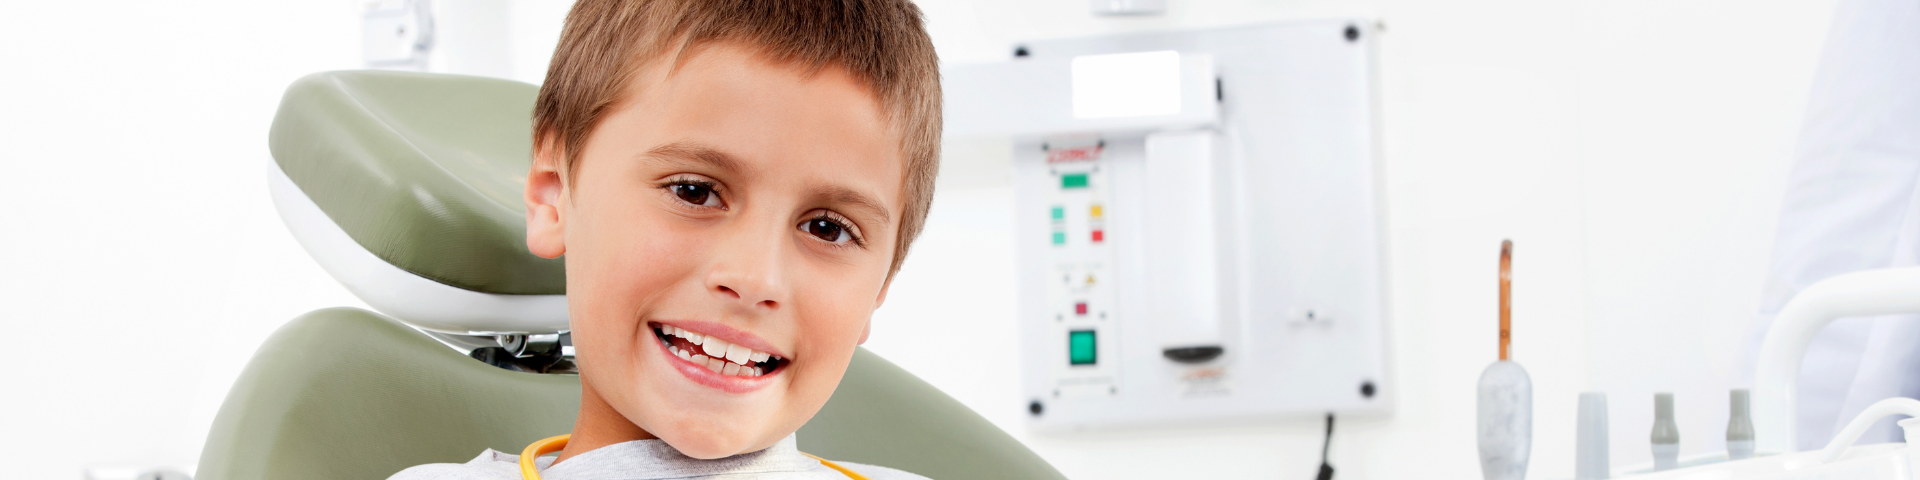 Childrens dental blog header 0132023